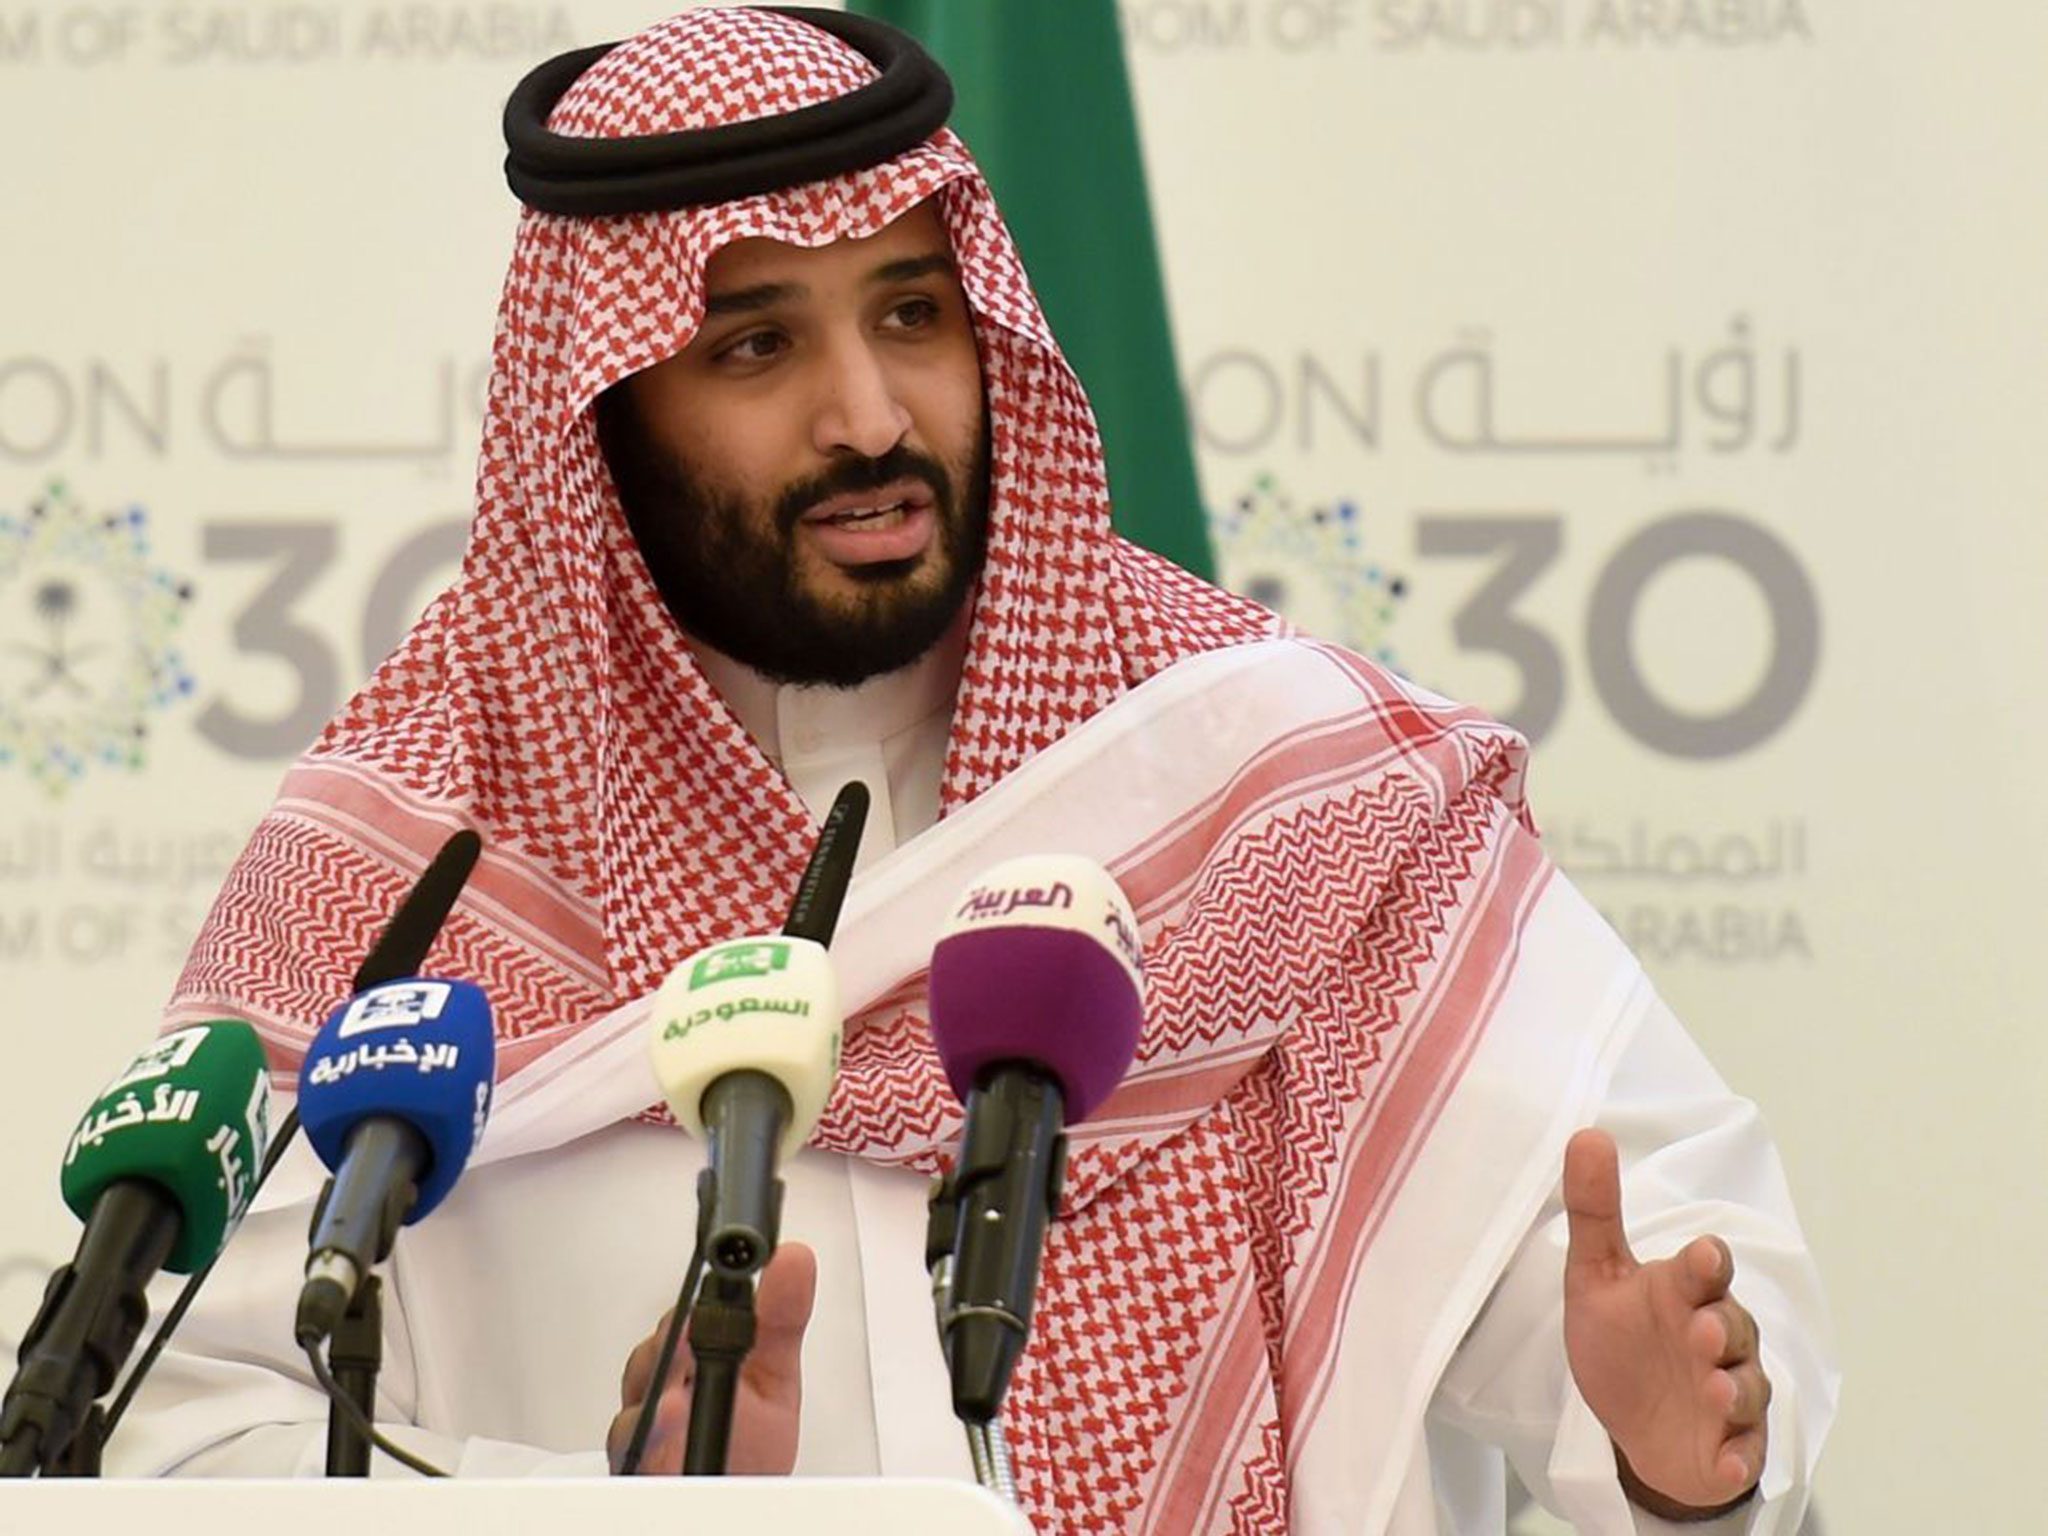 Saudi Deputy Crown Prince Mohammed bin Salman